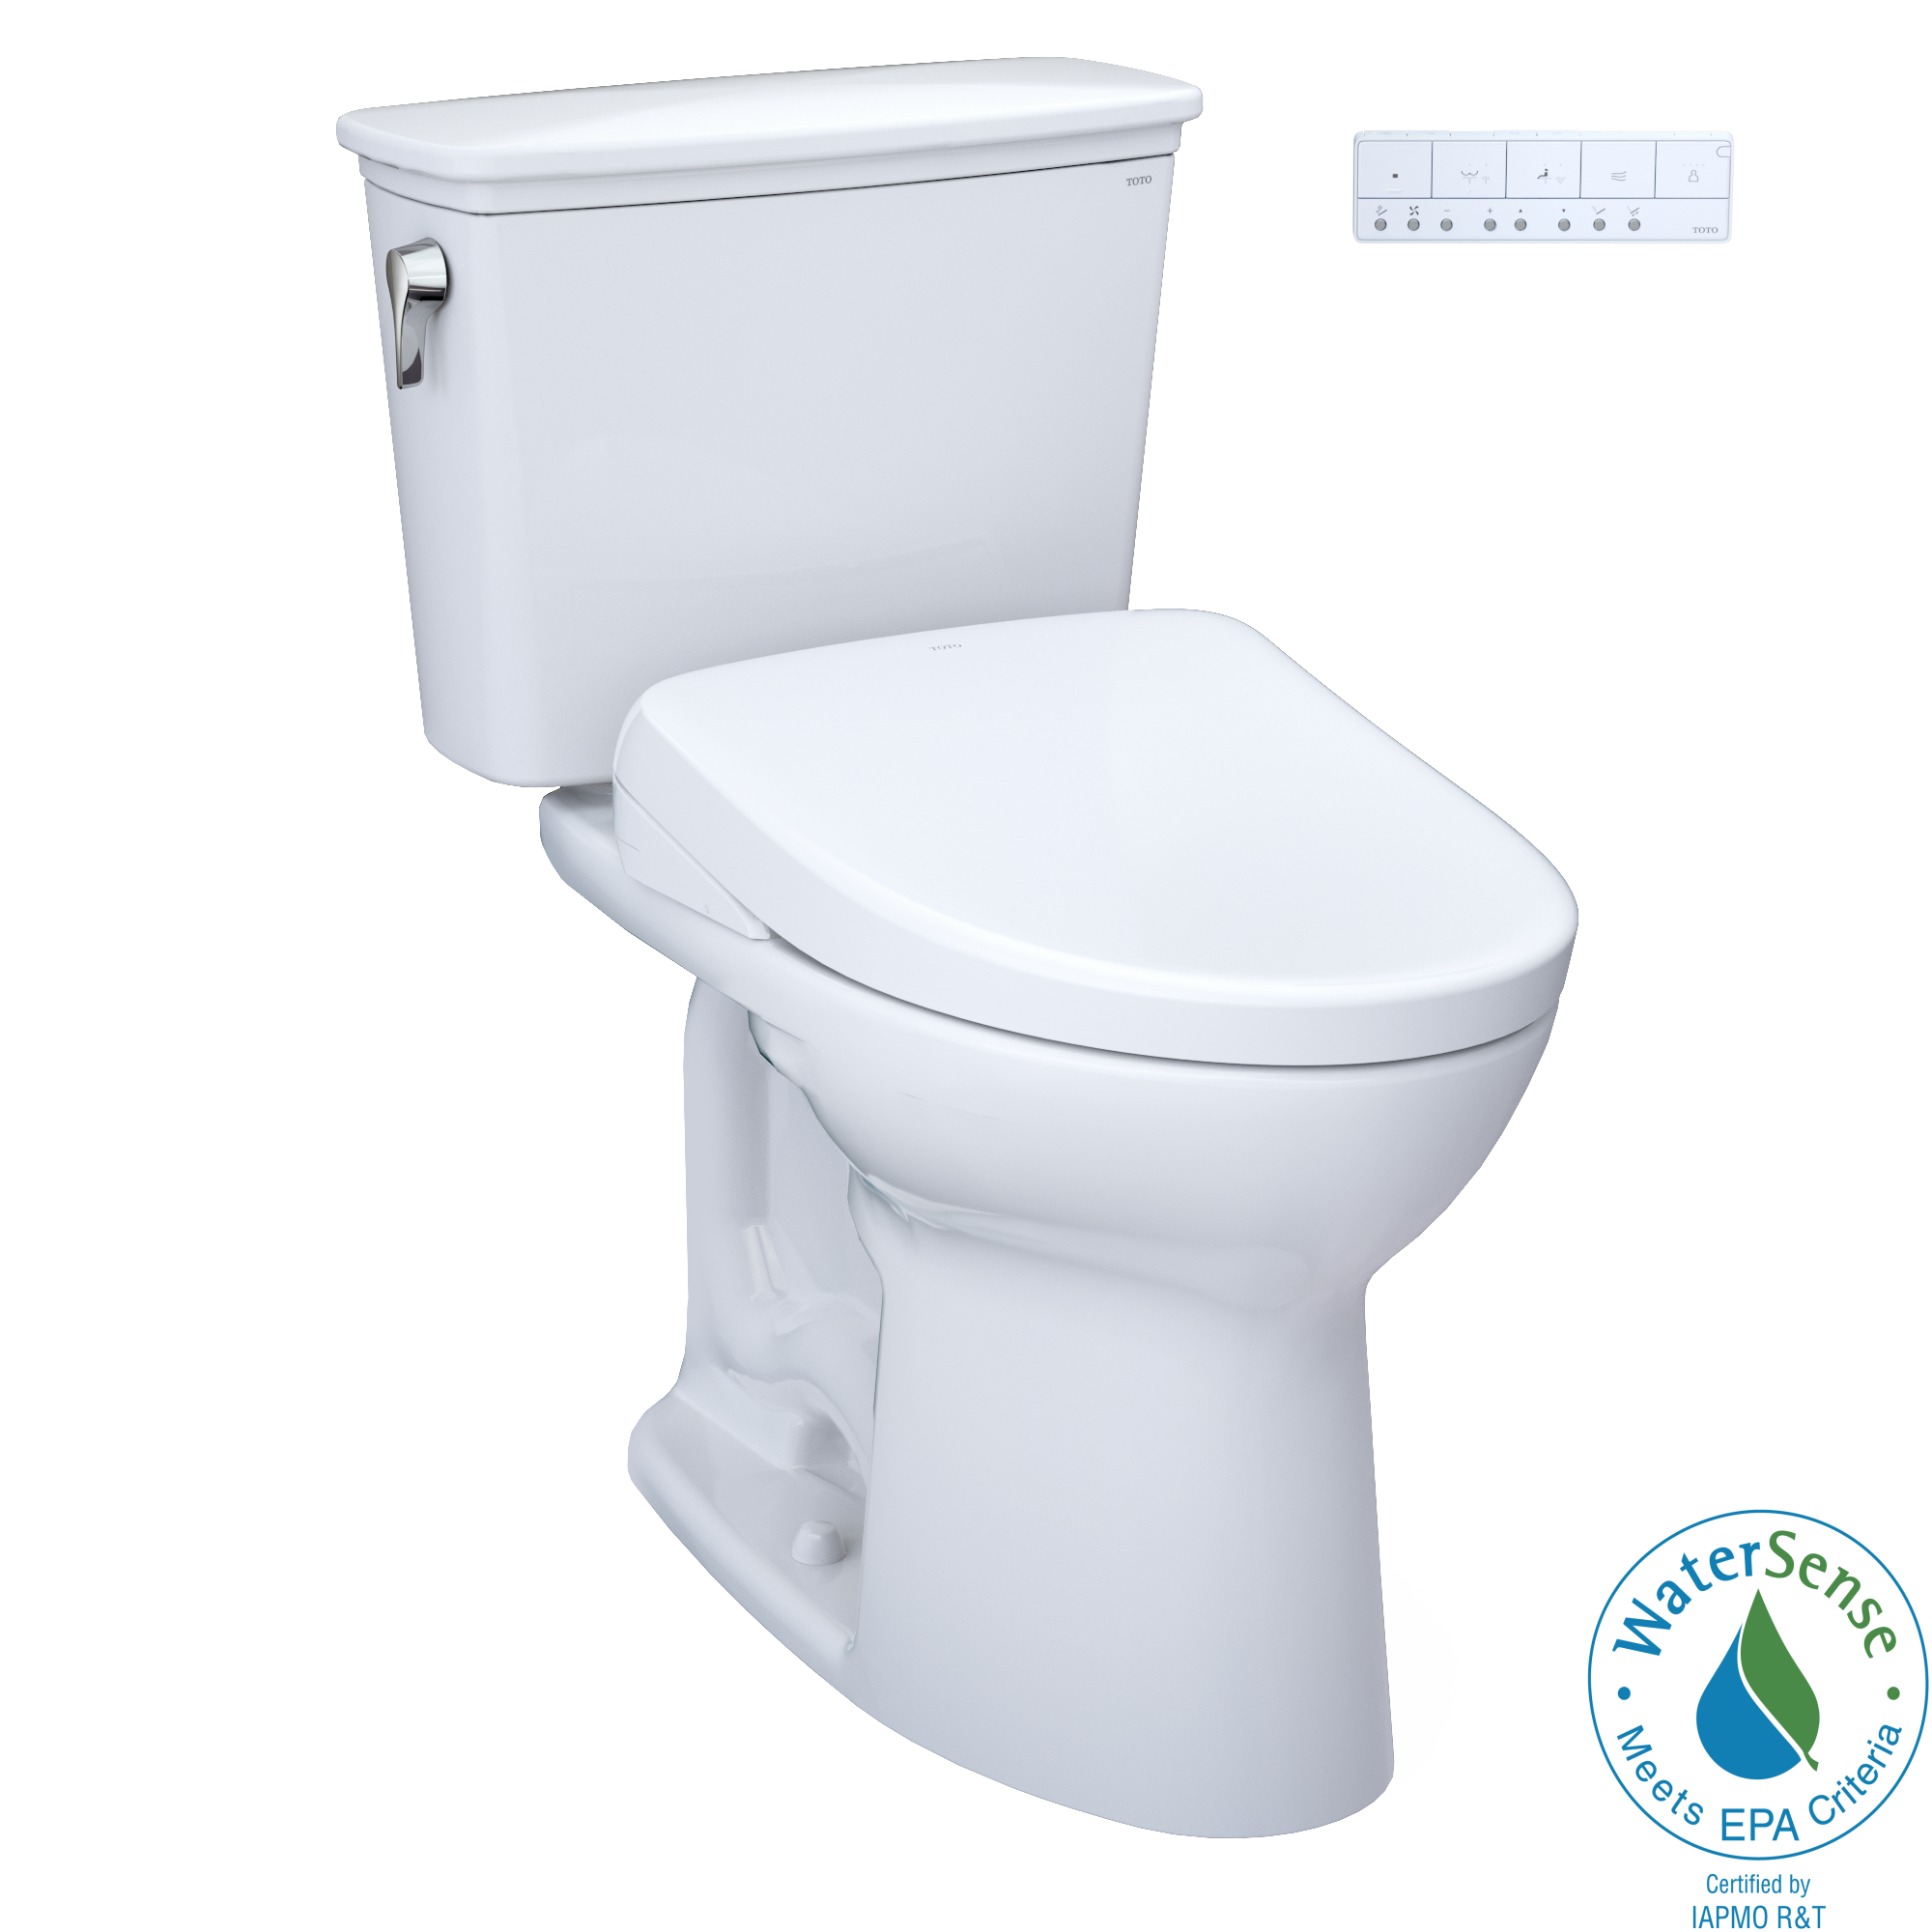 TOTO Drake Transitional WASHLET+ Two-Piece Elongated 1.28 GPF TORNADO FLUSH Toilet with S7A Contemporary Bidet Seat, Cotton White - MW7864736CEG#01, MW7864736CEGA#01